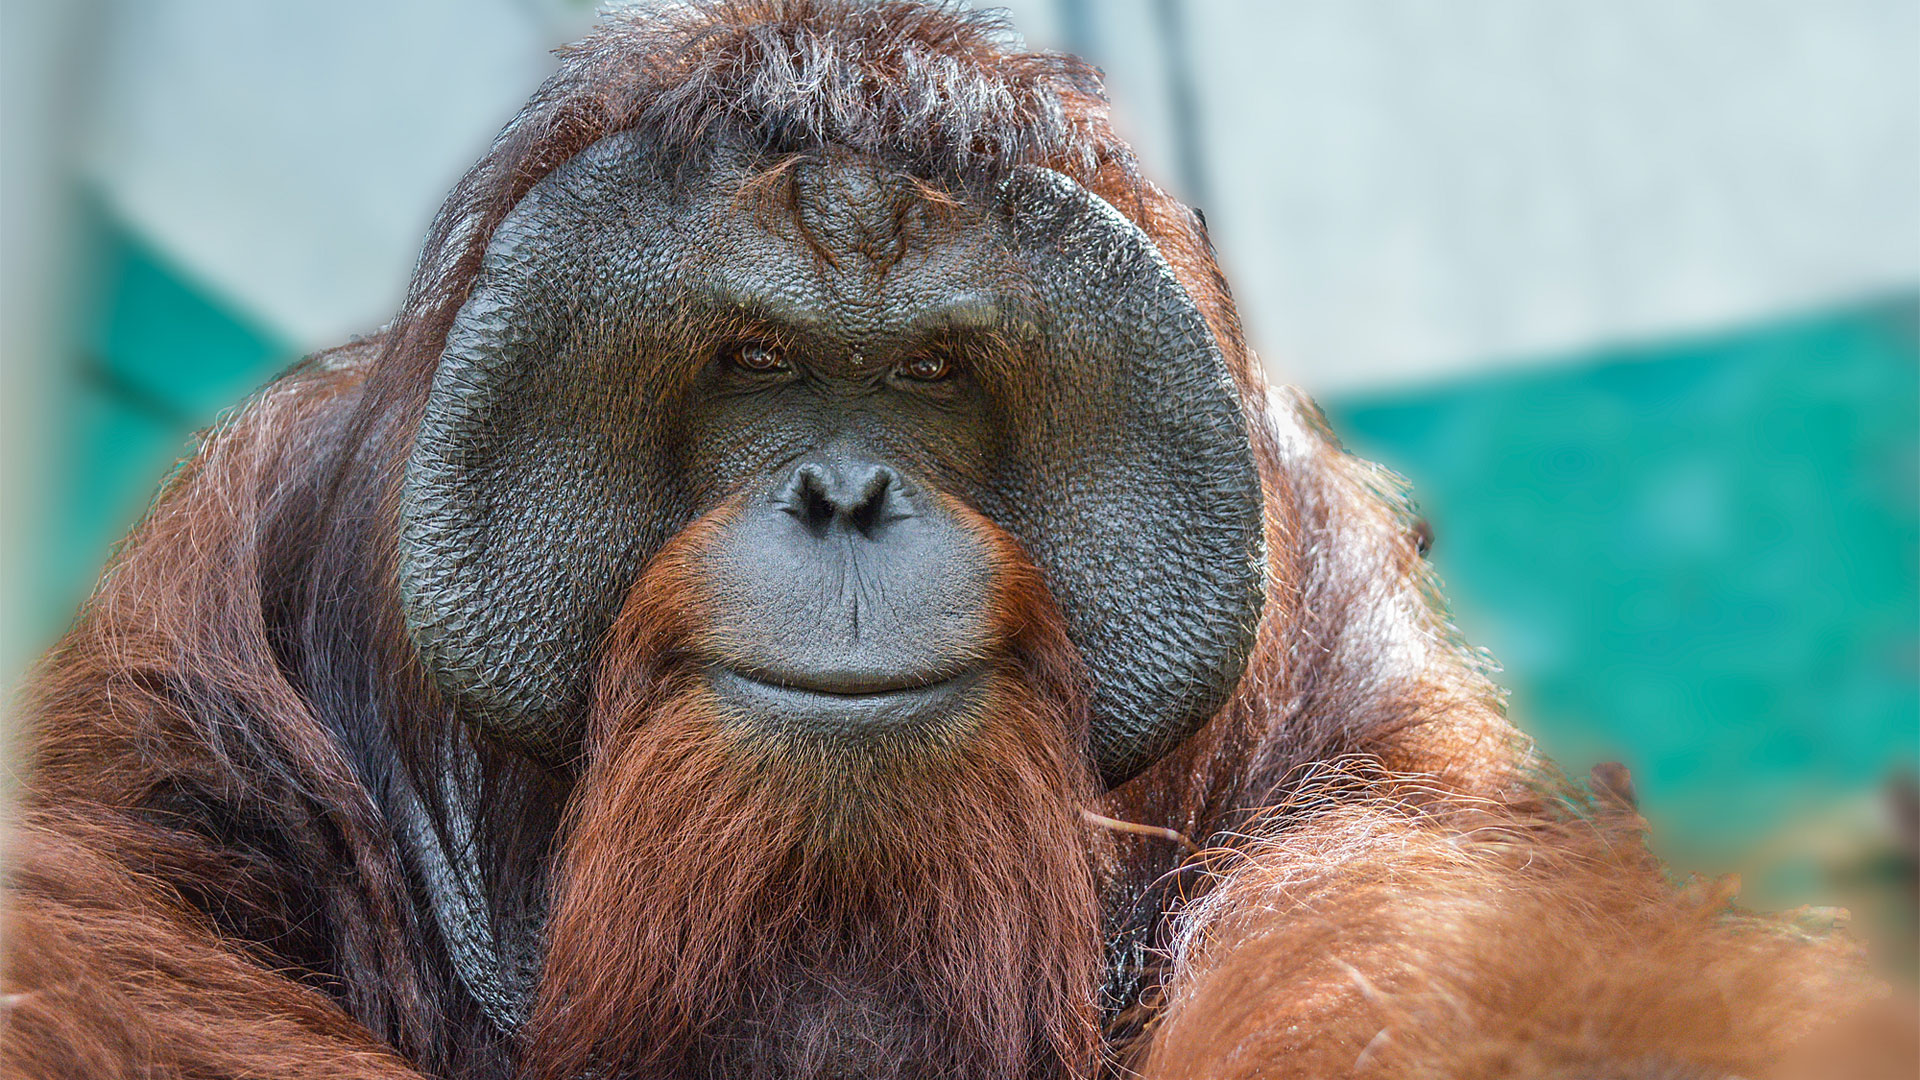 Detail Images Of Orangutans Nomer 12